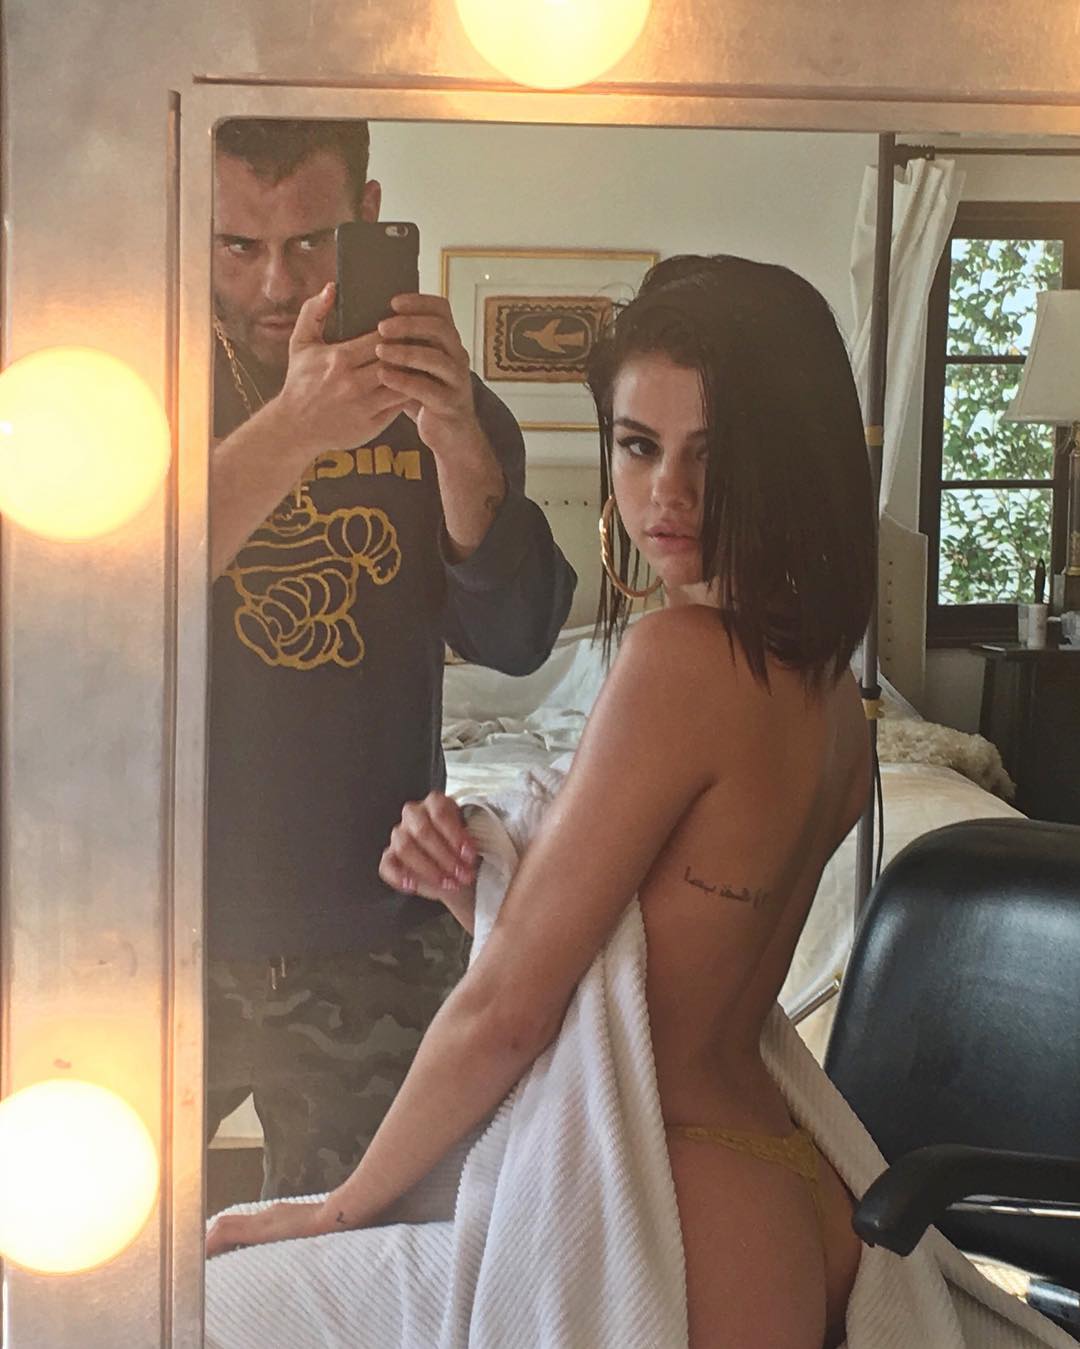 Selena Gomez bares her behind in daring new Instagram post.